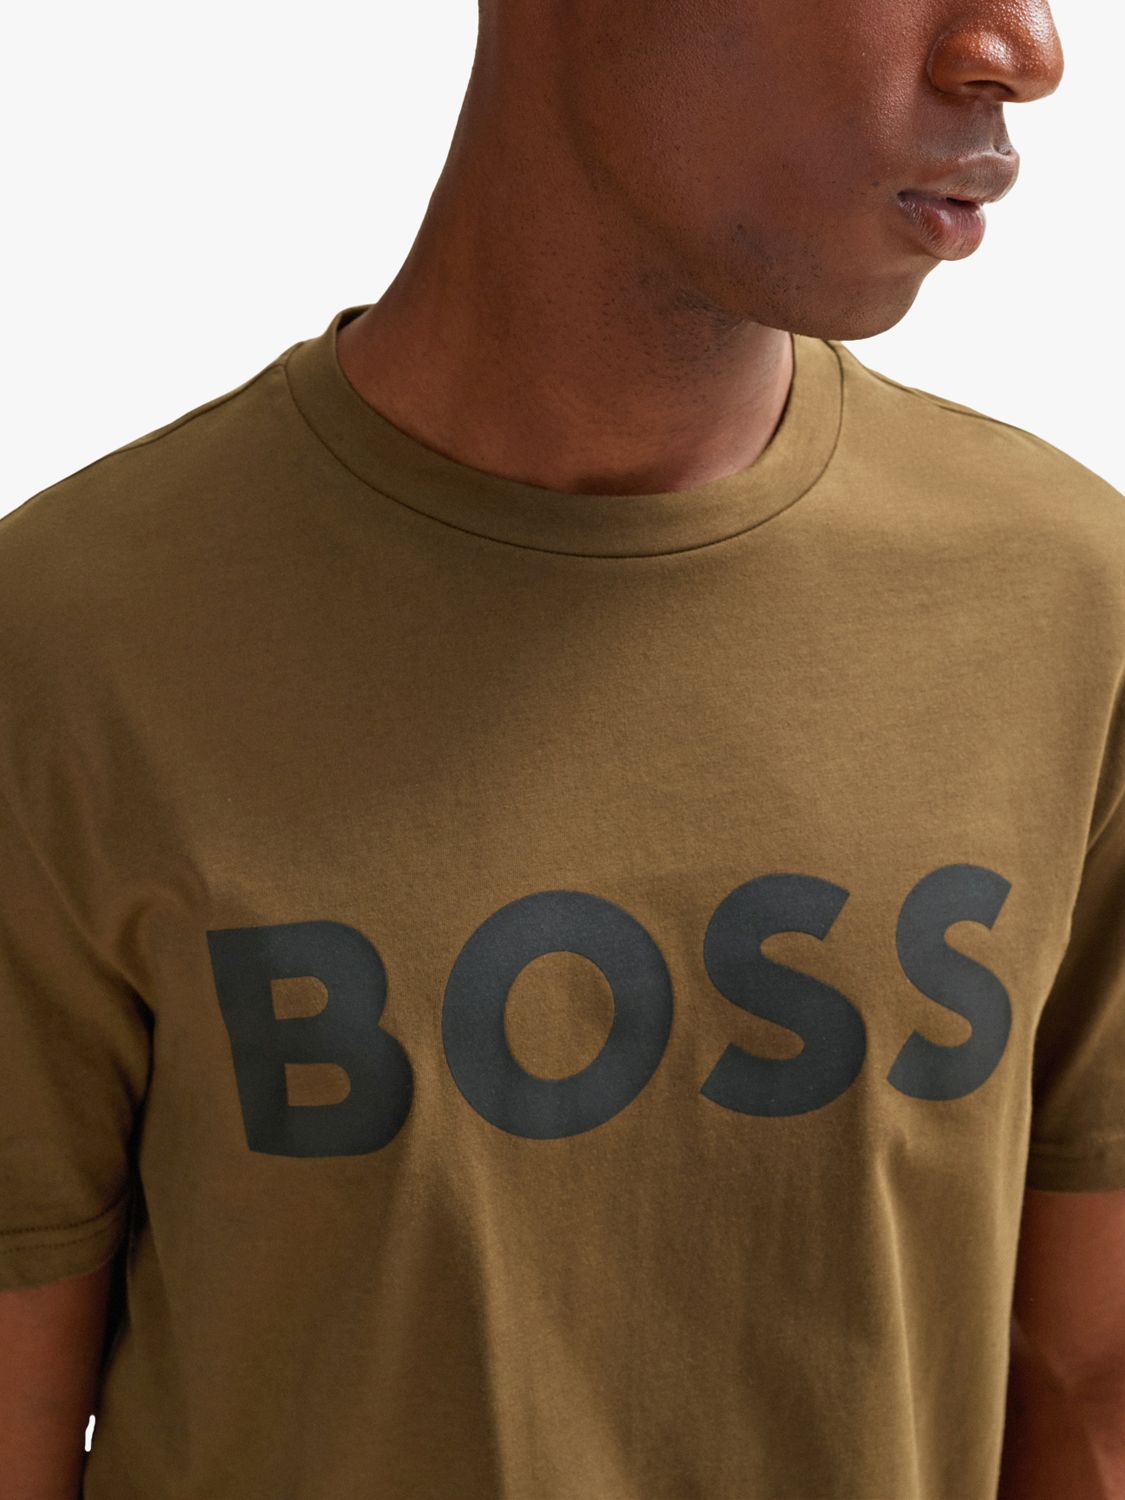 BOSS Thinking 368 T-Shirt, Green, L